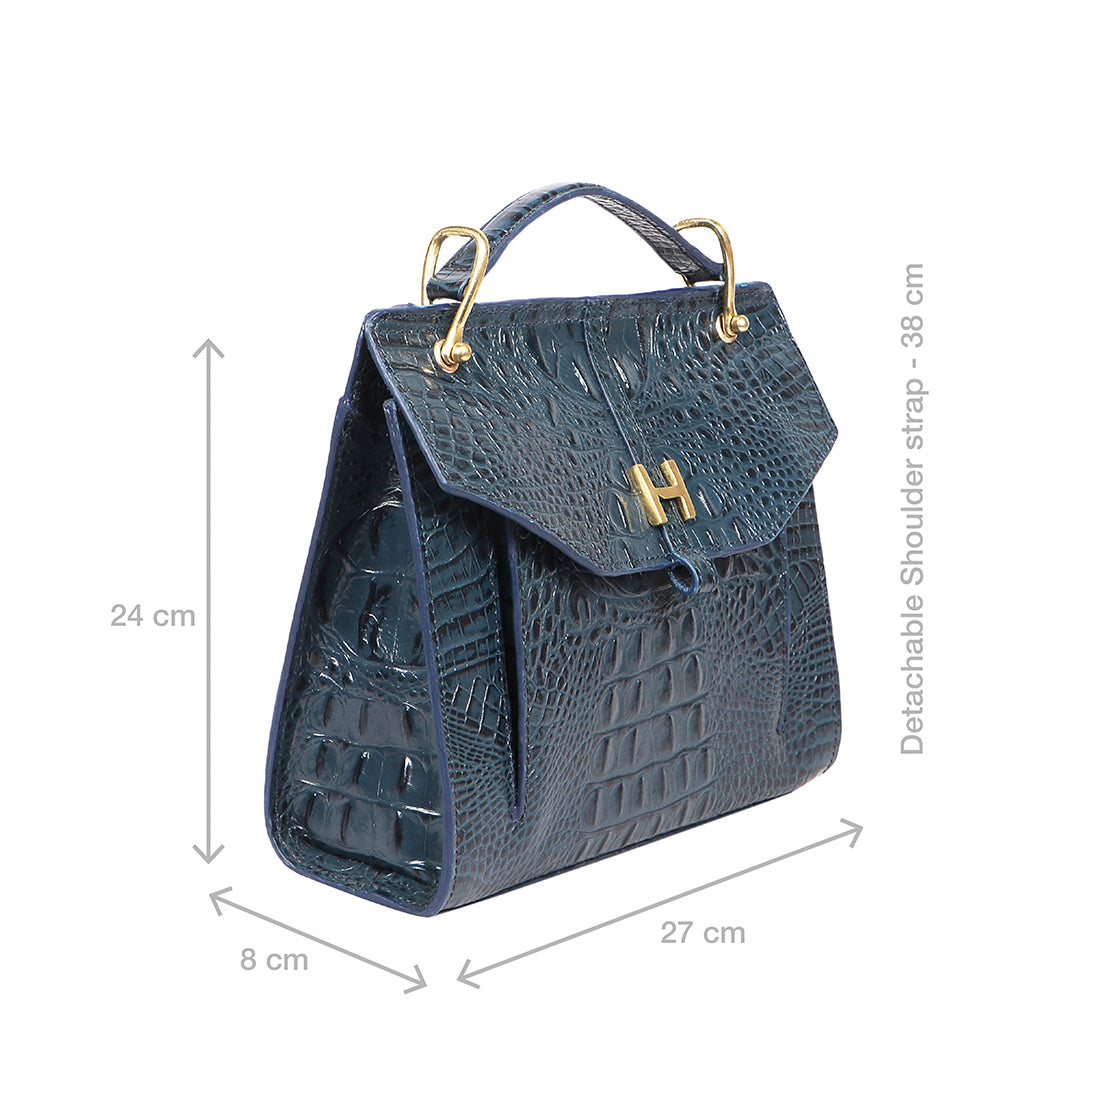 Buy Blue Handbags for Women by HIDESIGN Online